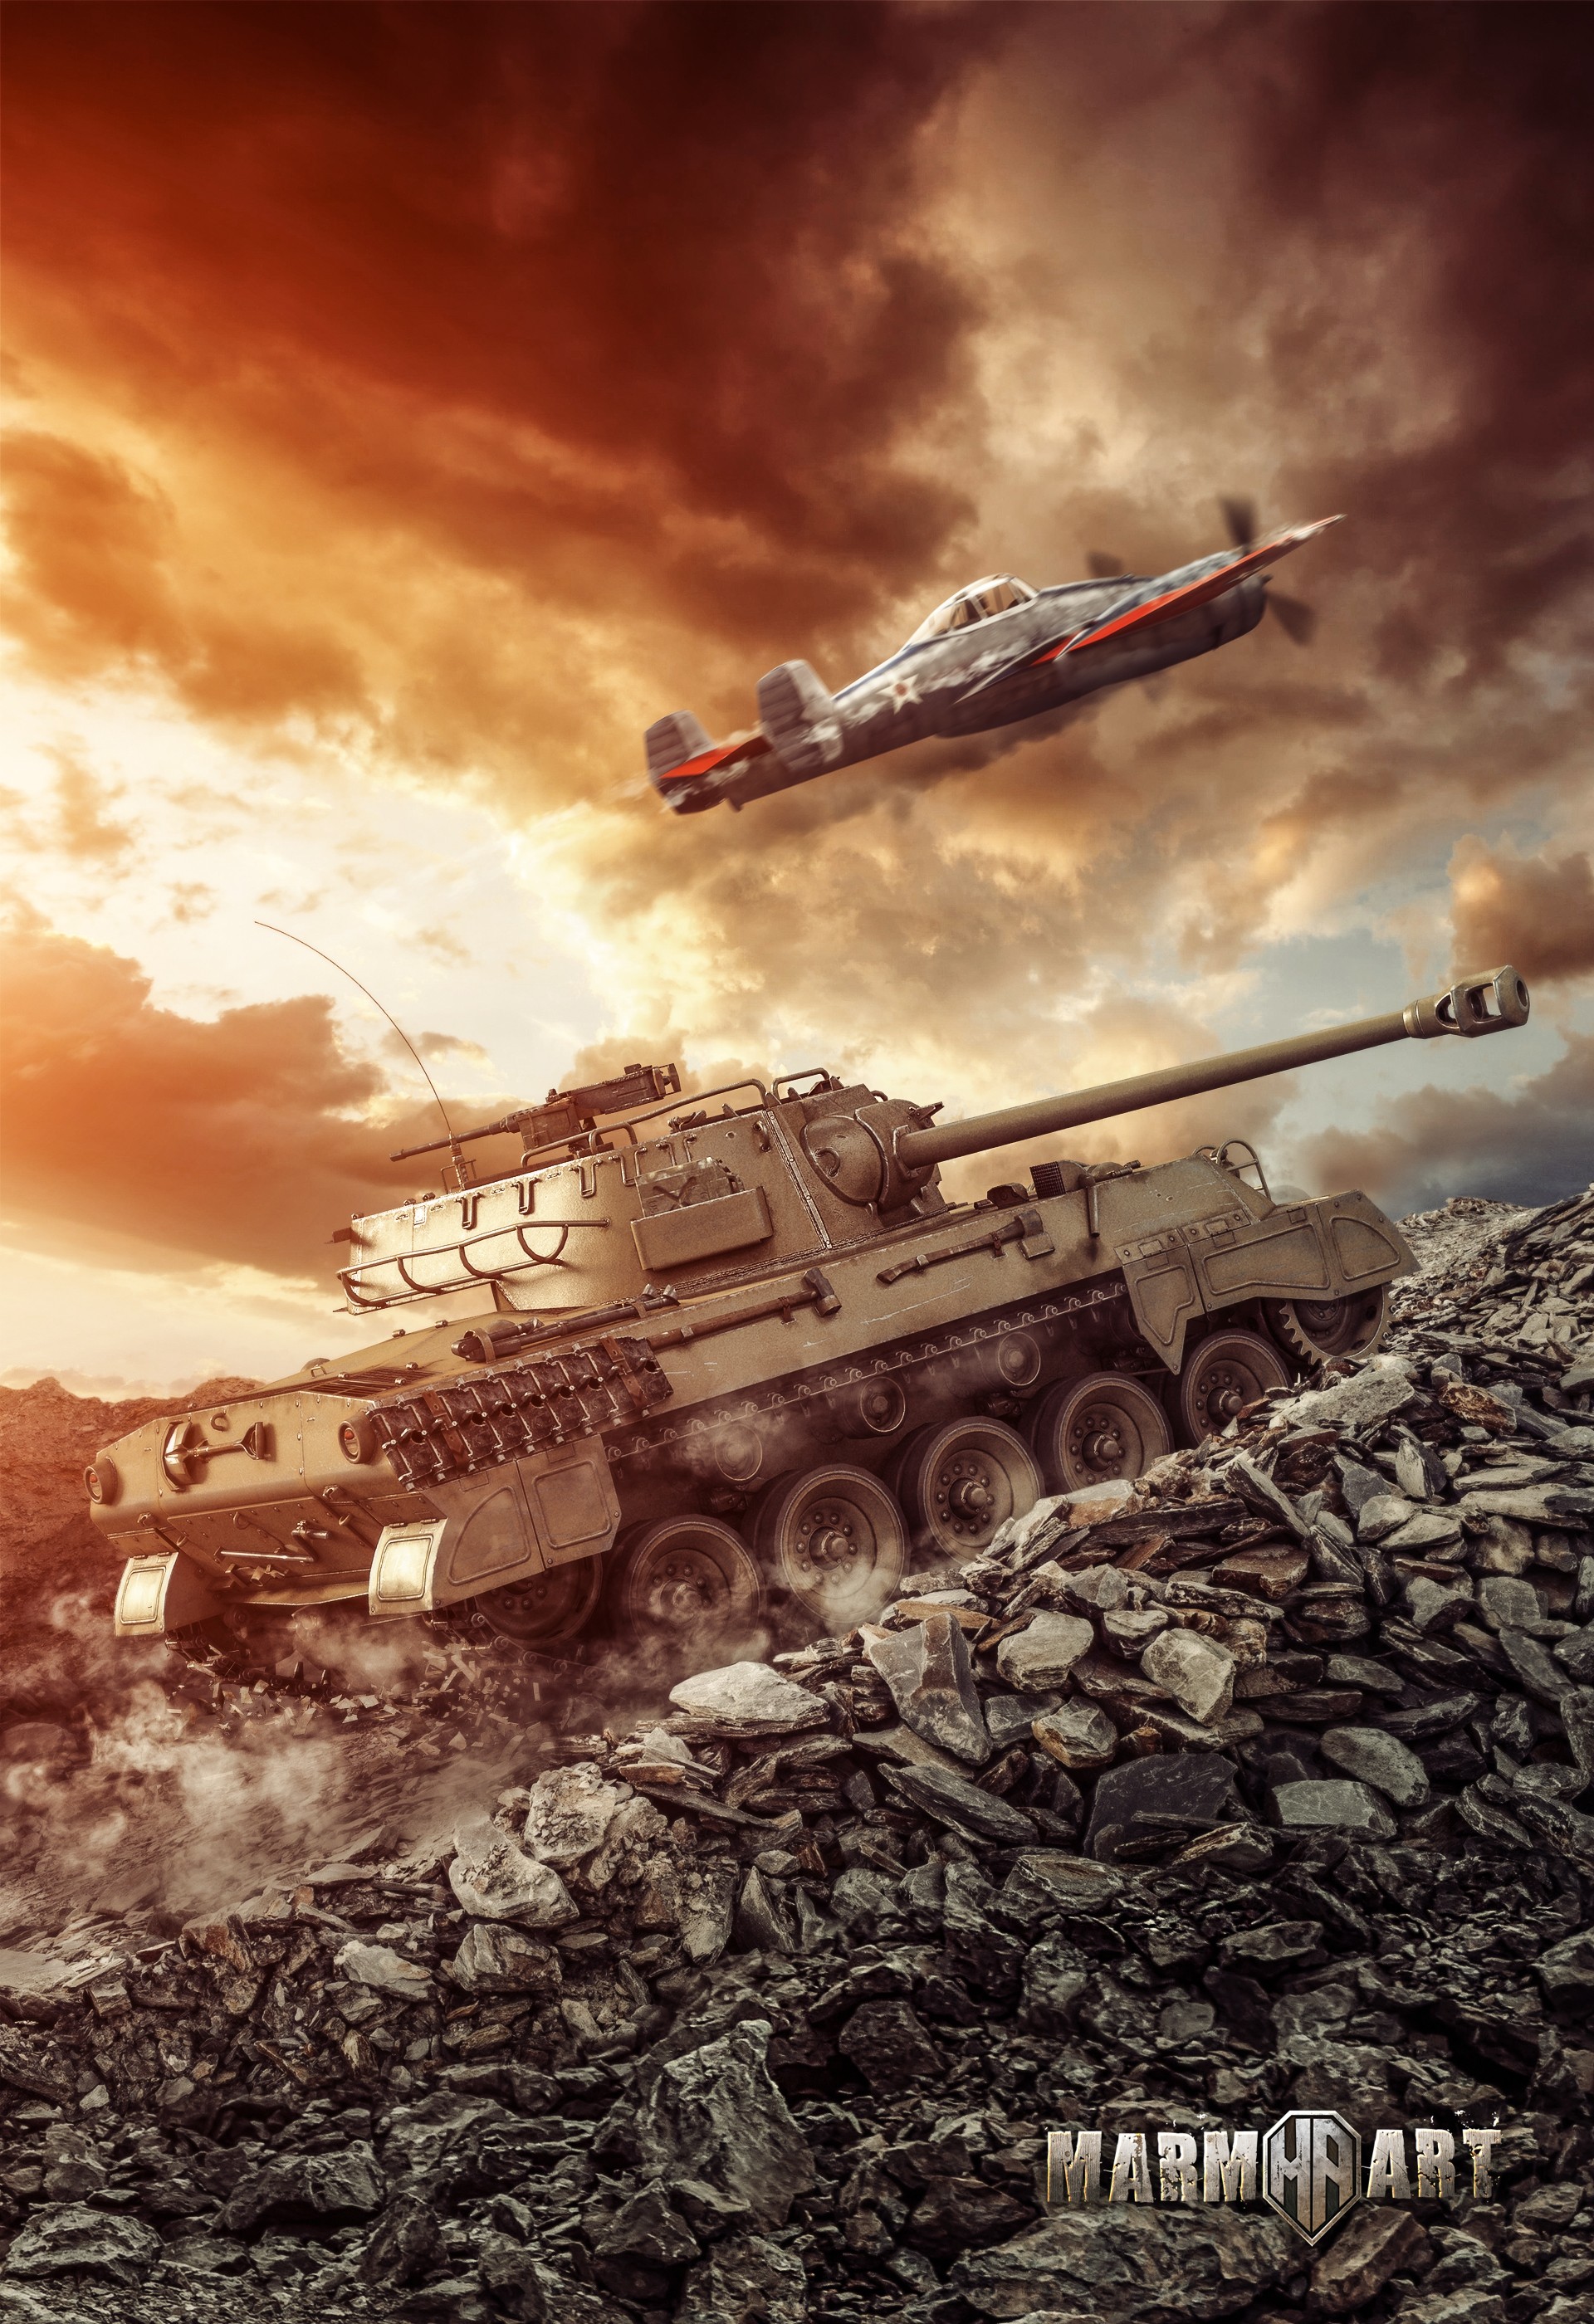 World Of Tanks, Wargaming, Video Games, M18 Hellcat Wallpaper